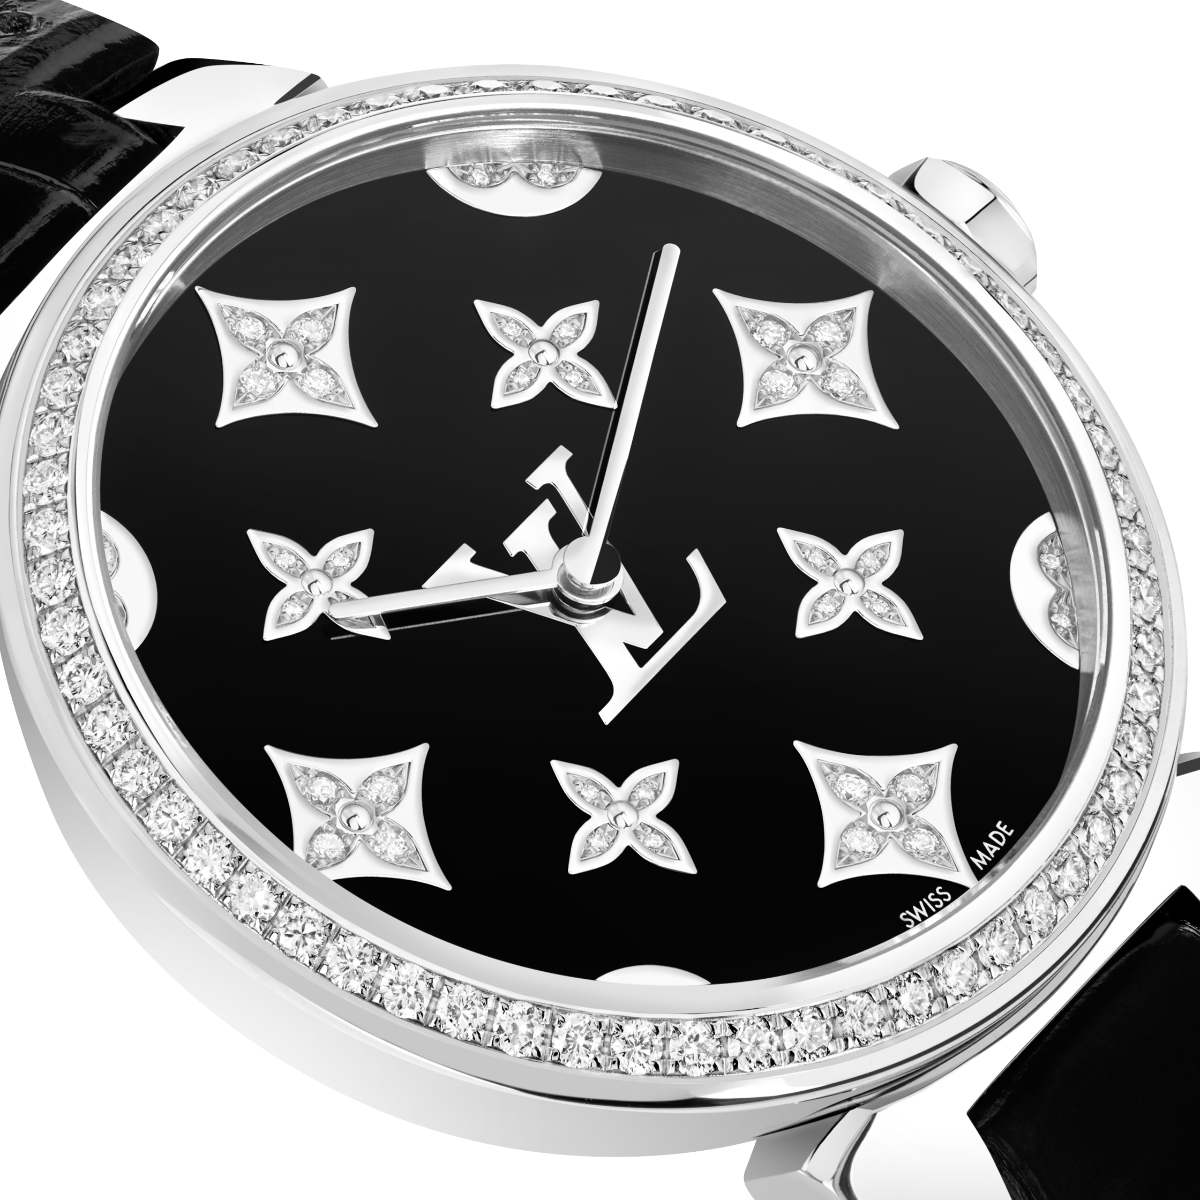 Louis Vuitton: Louis Vuitton Presents Its New Watch: Tambour Slim